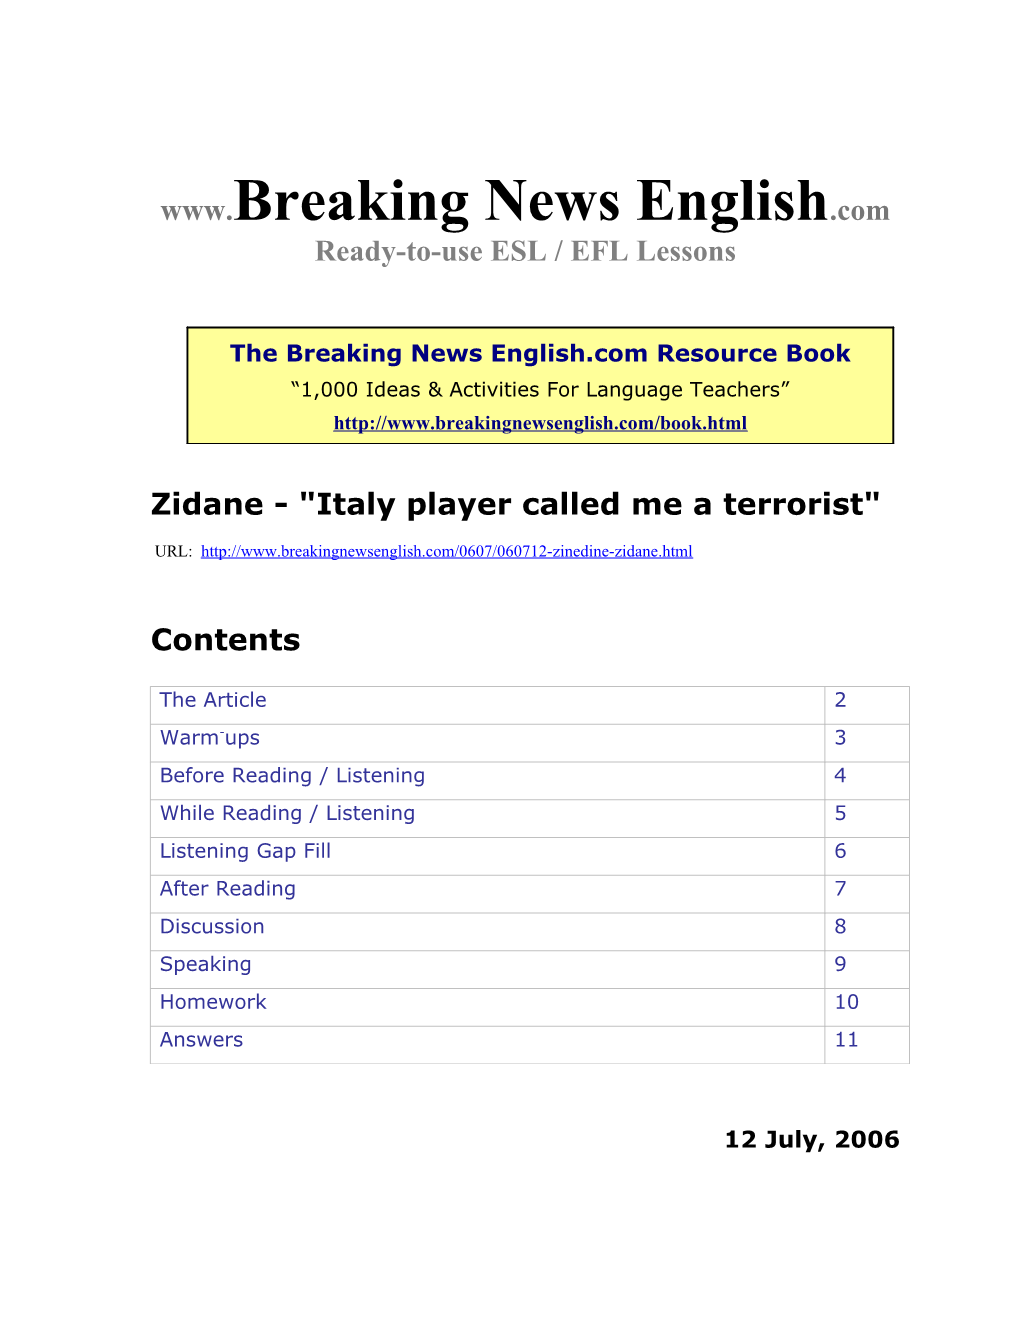 Zidane - Italy Player Called Me a Terrorist